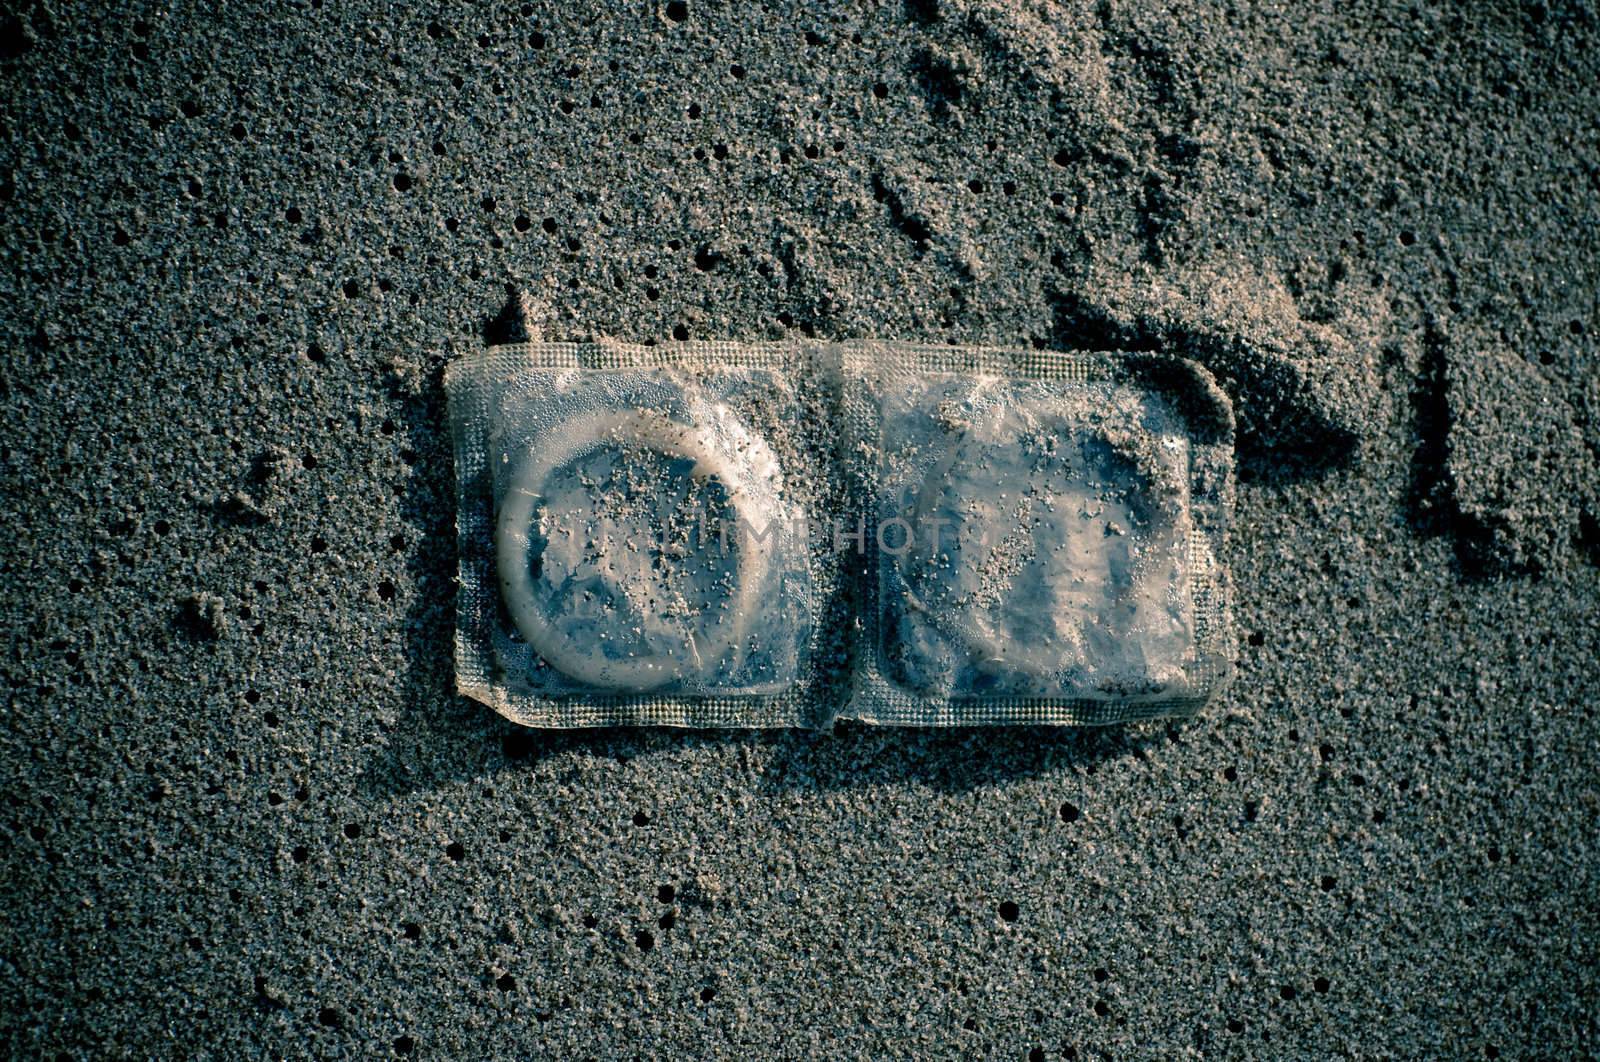 Condoms in sand by Erchog